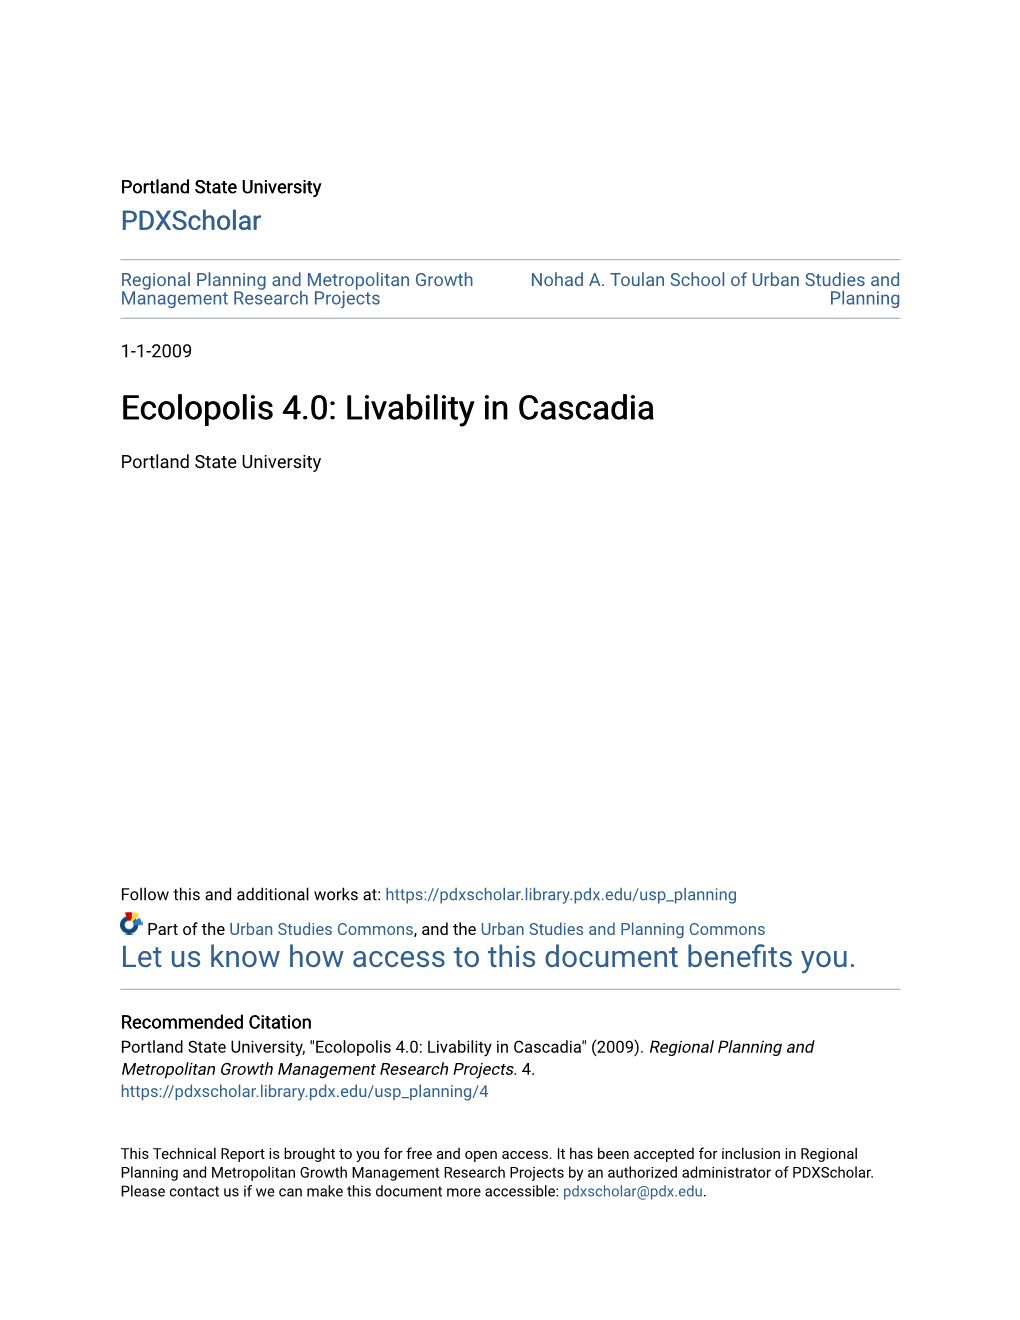 Ecolopolis 4.0: Livability in Cascadia